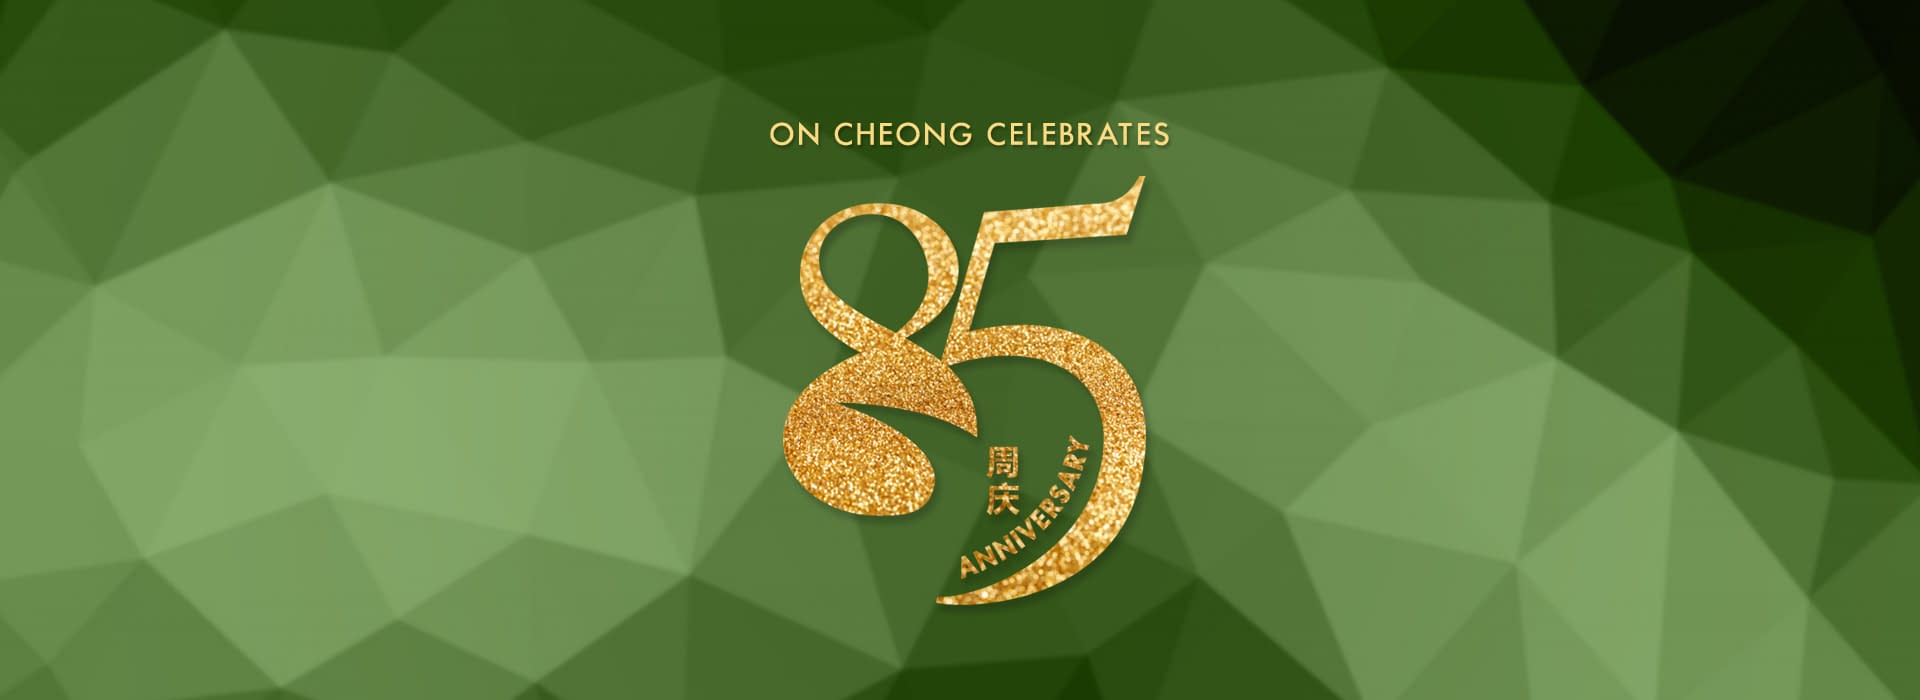 On Cheong 85th anniversary